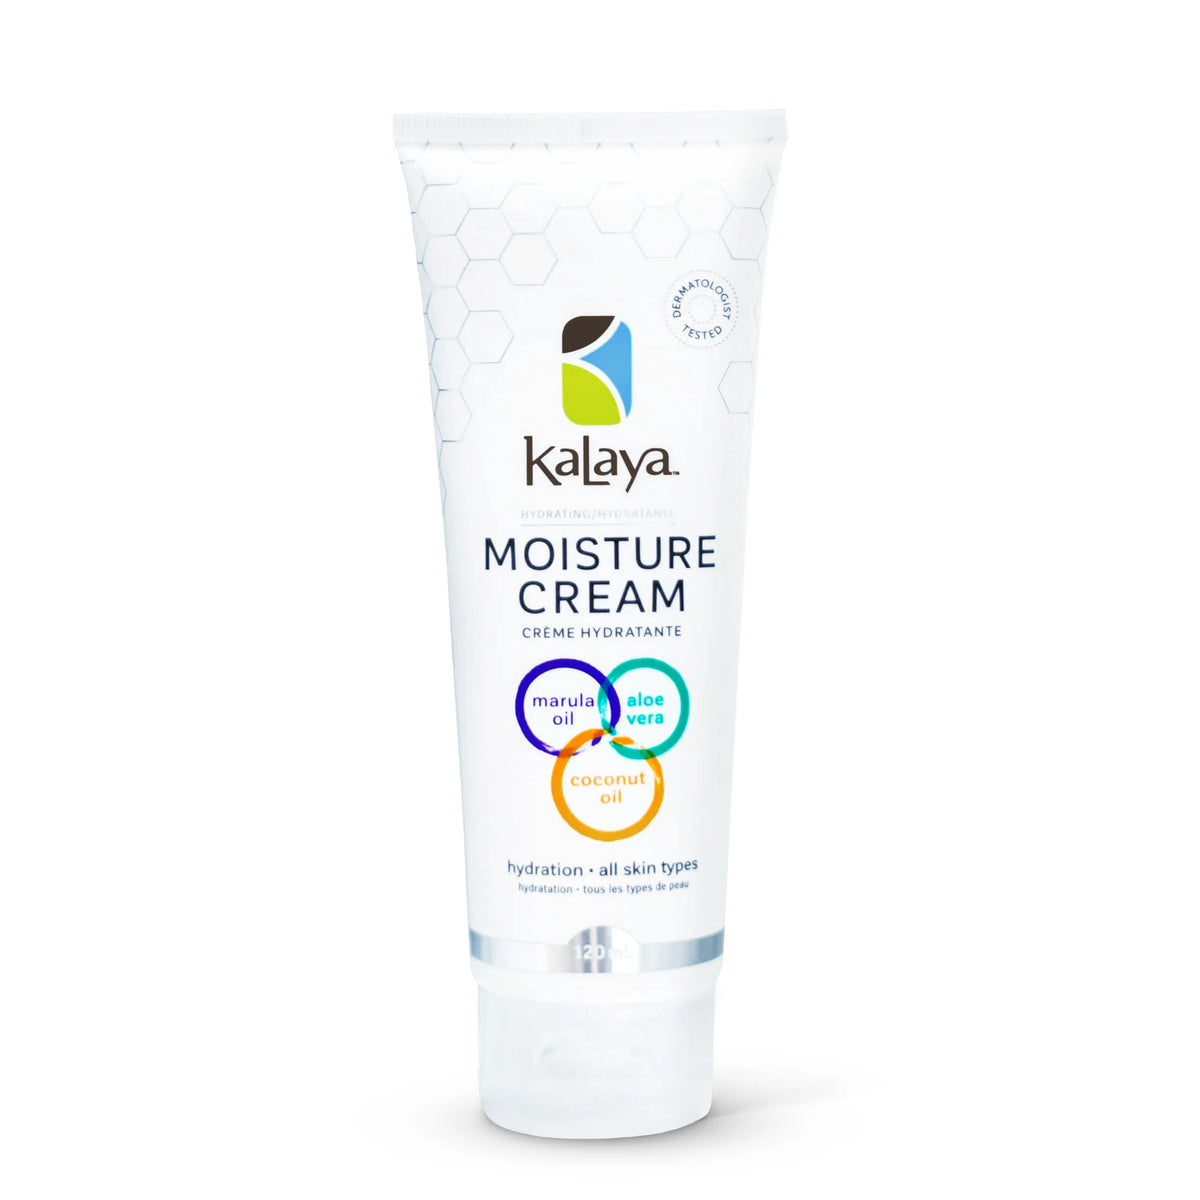 KaLaya Moisture Cream 4 fl oz (120mL)